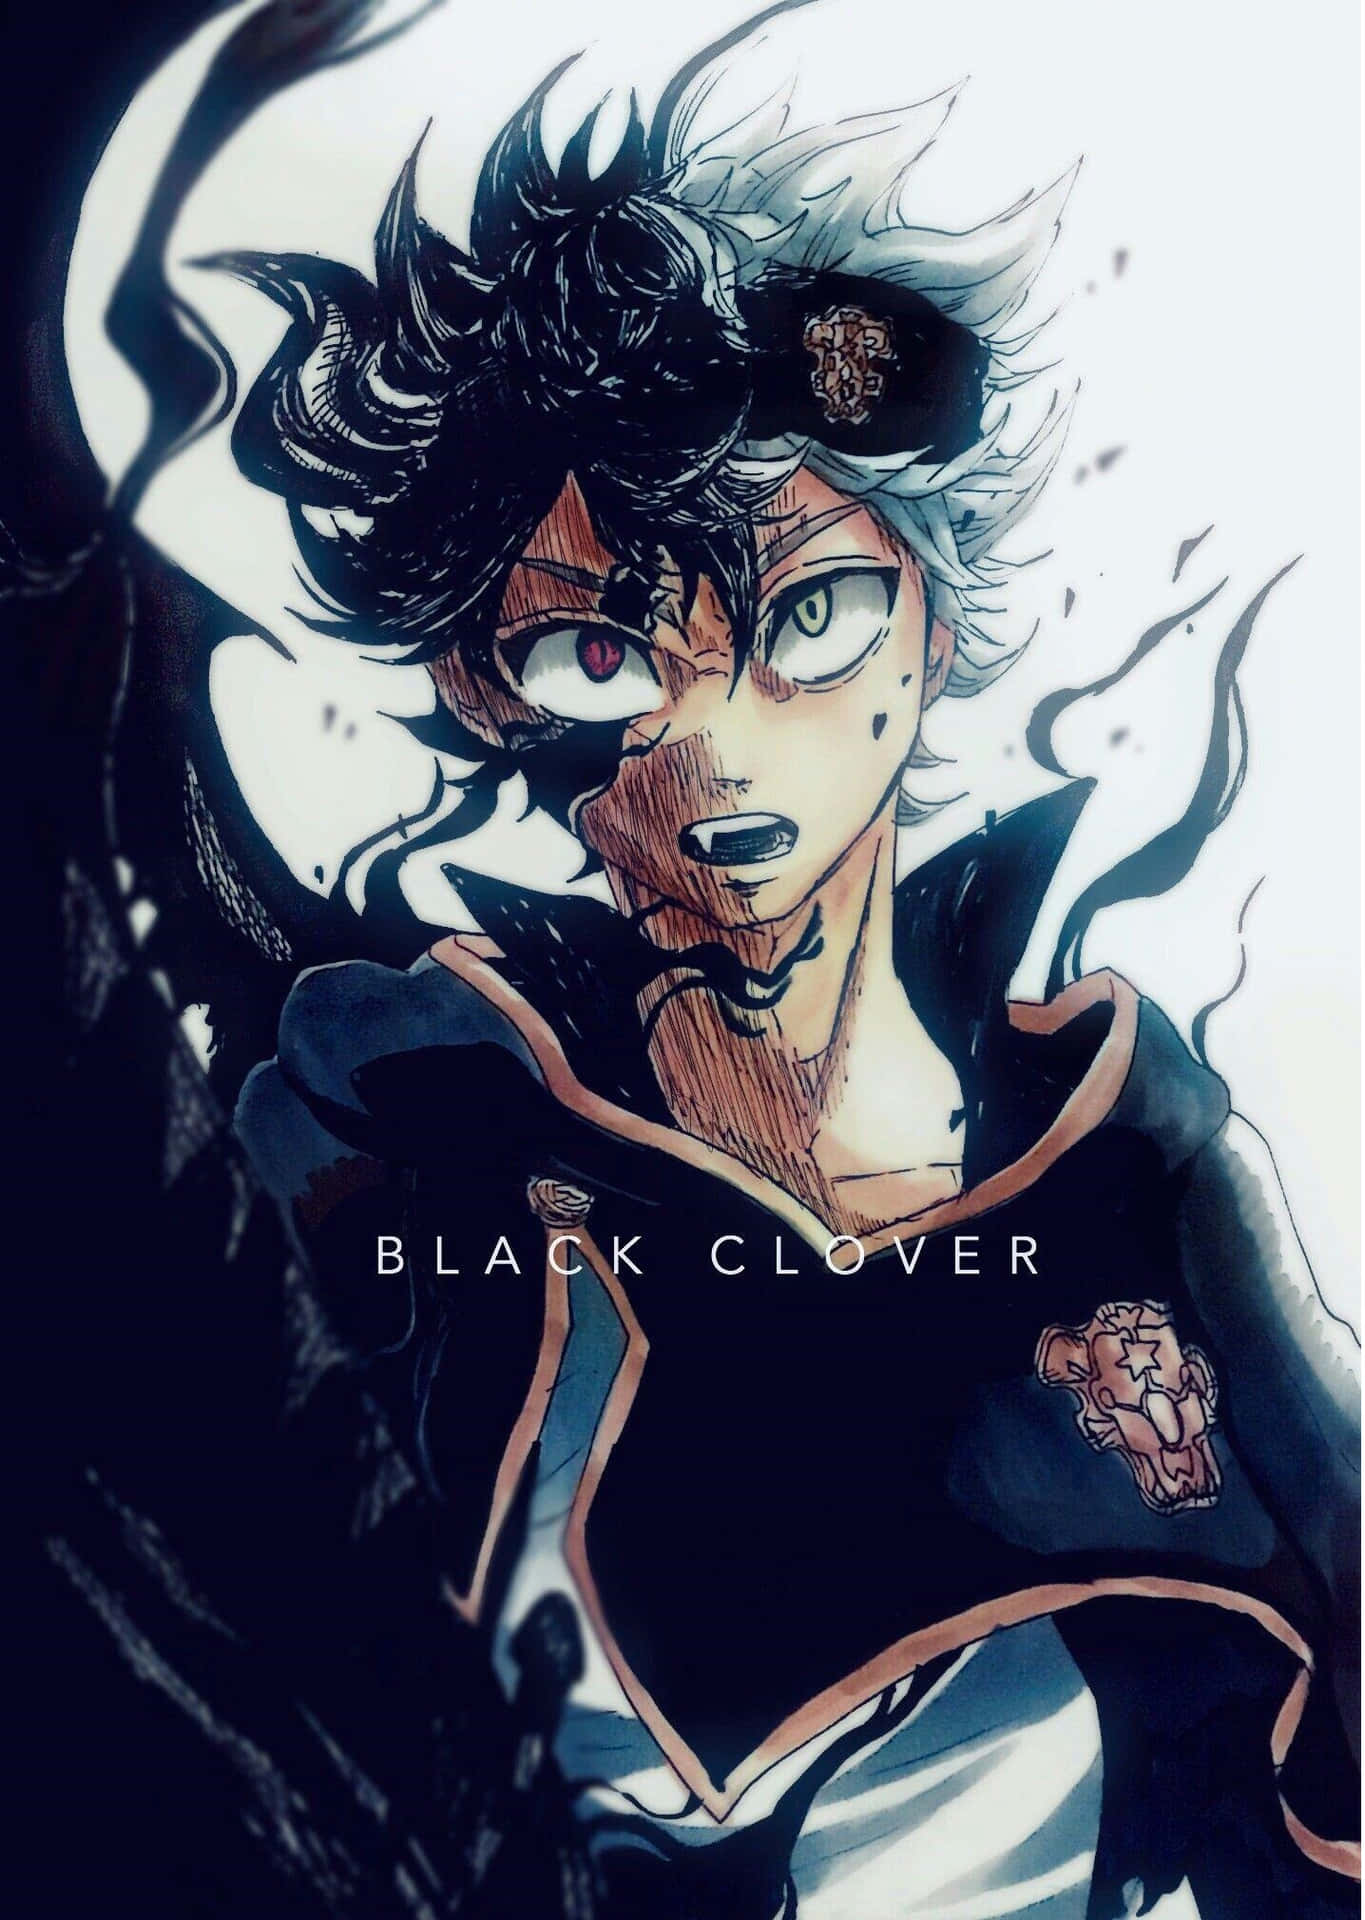 Asta Black Clover Power Unleashed Wallpaper